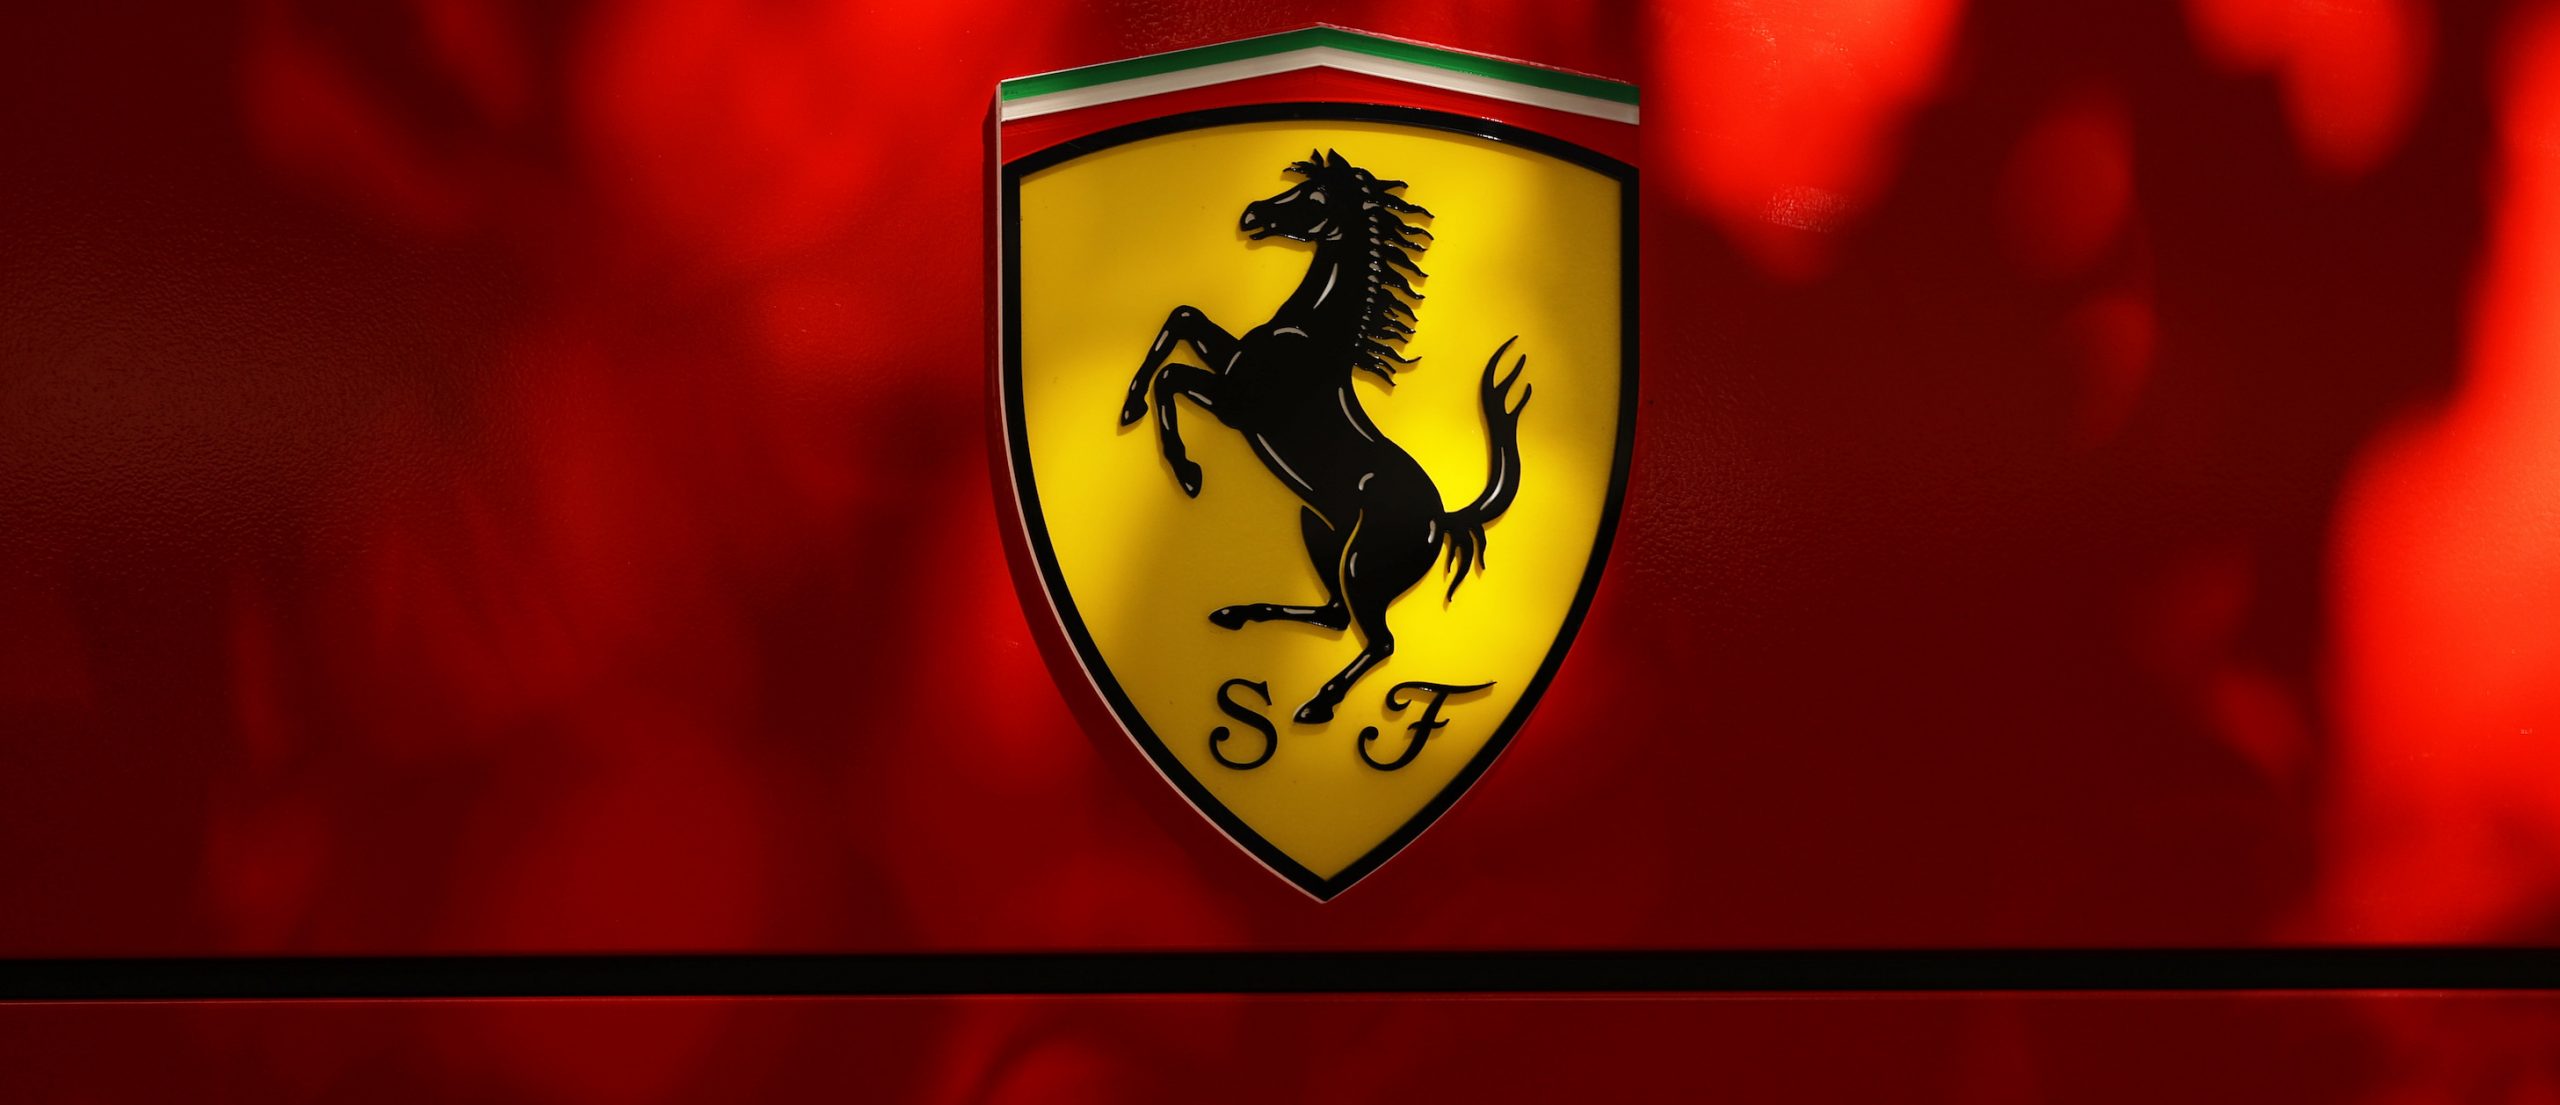 Brendon Leigh and Ferrari Esports Part Ways